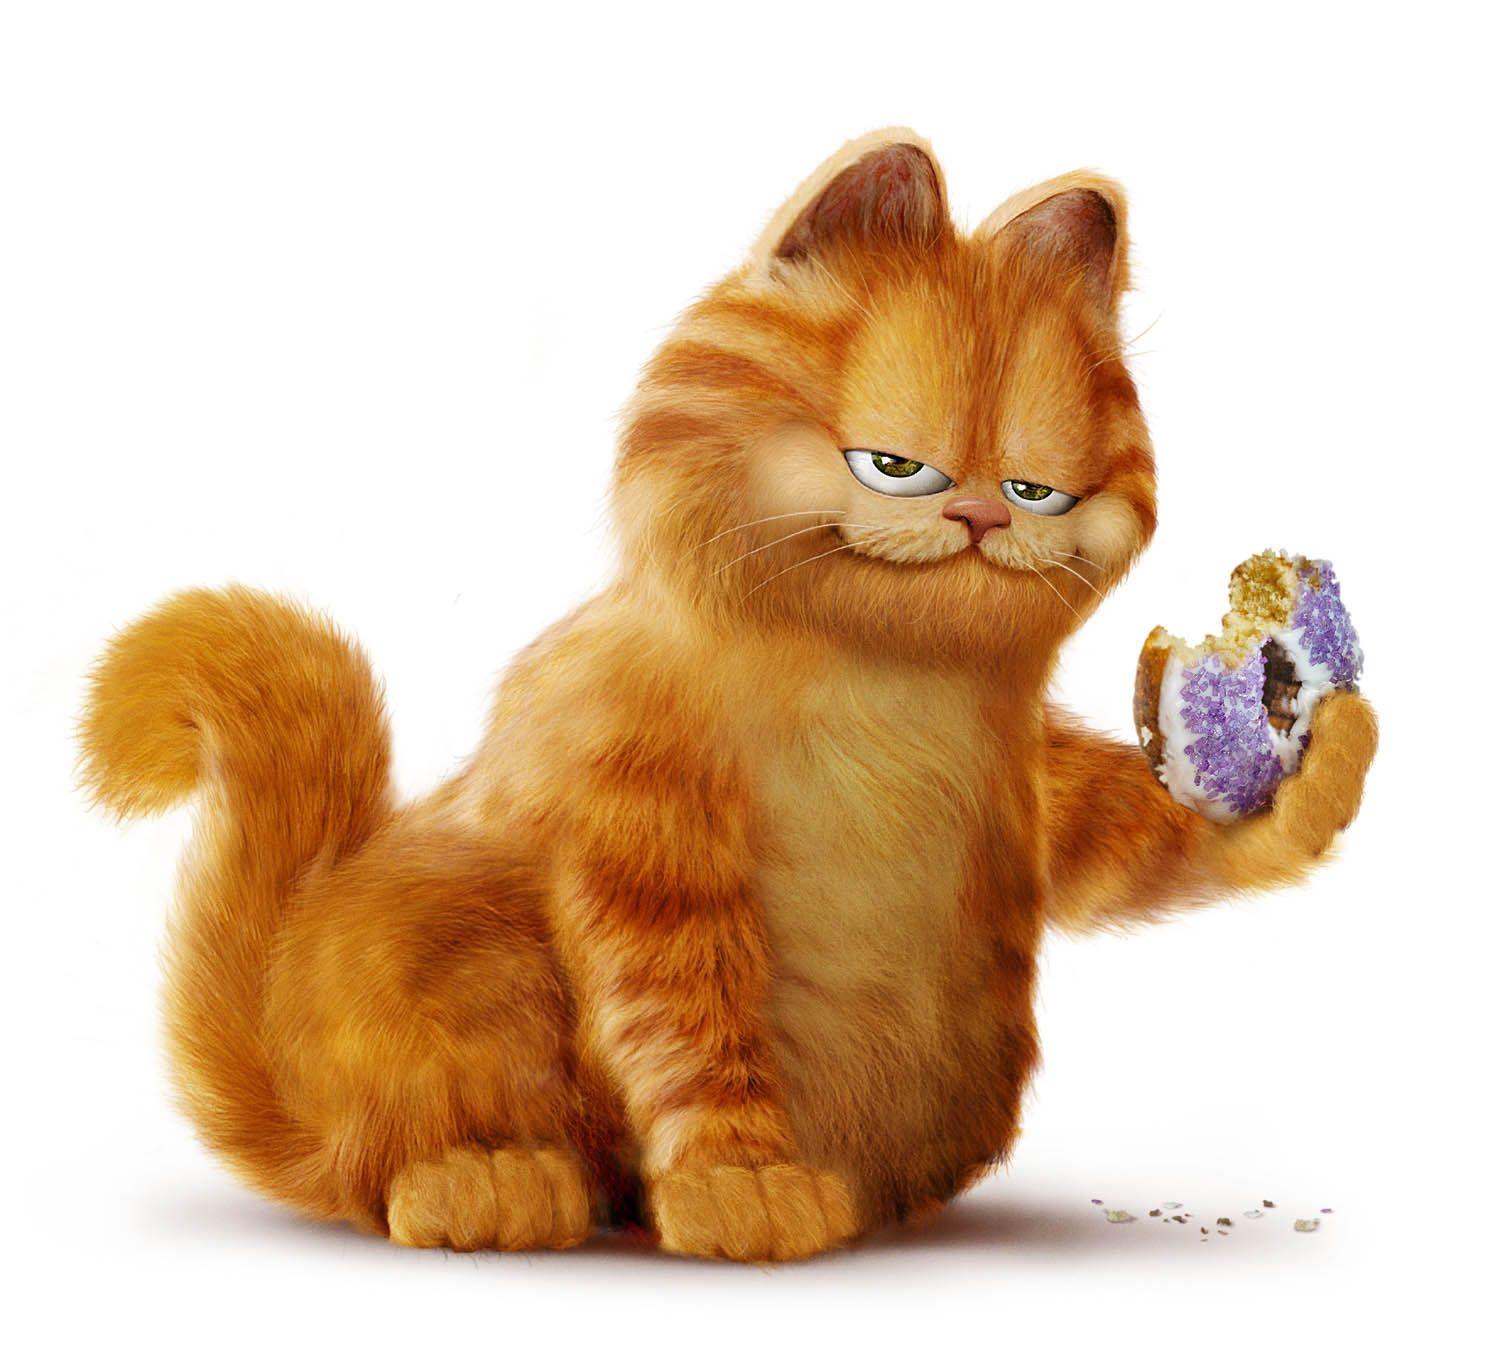 Garfield Movie Promo Animation. wallpaper